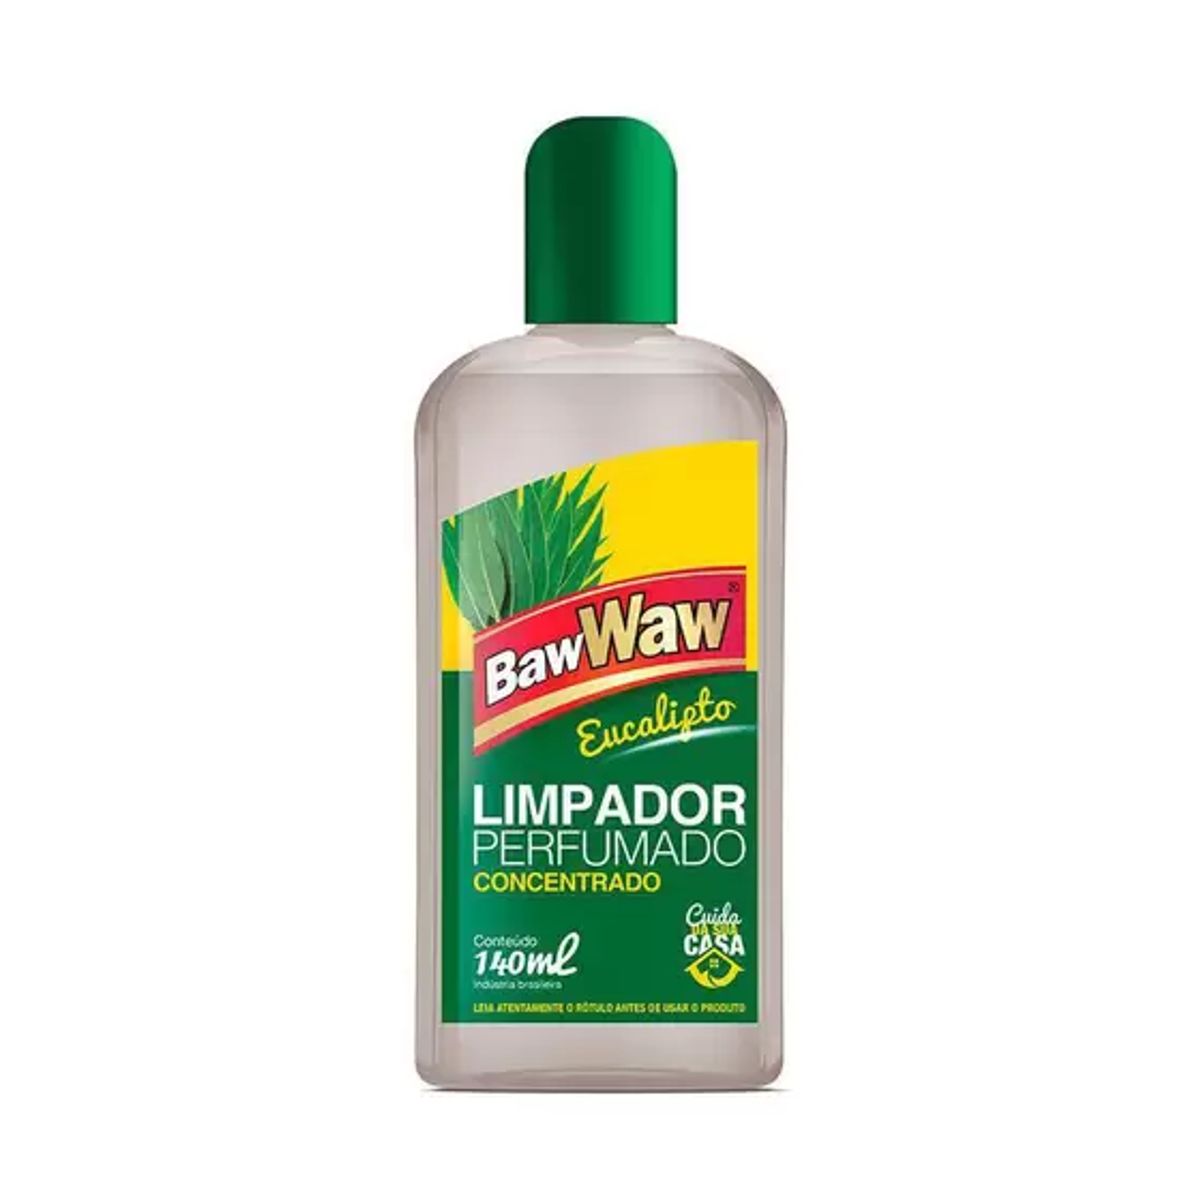 Limpador Perfumado Baw Waw  Eucalipto 140ml image number 0